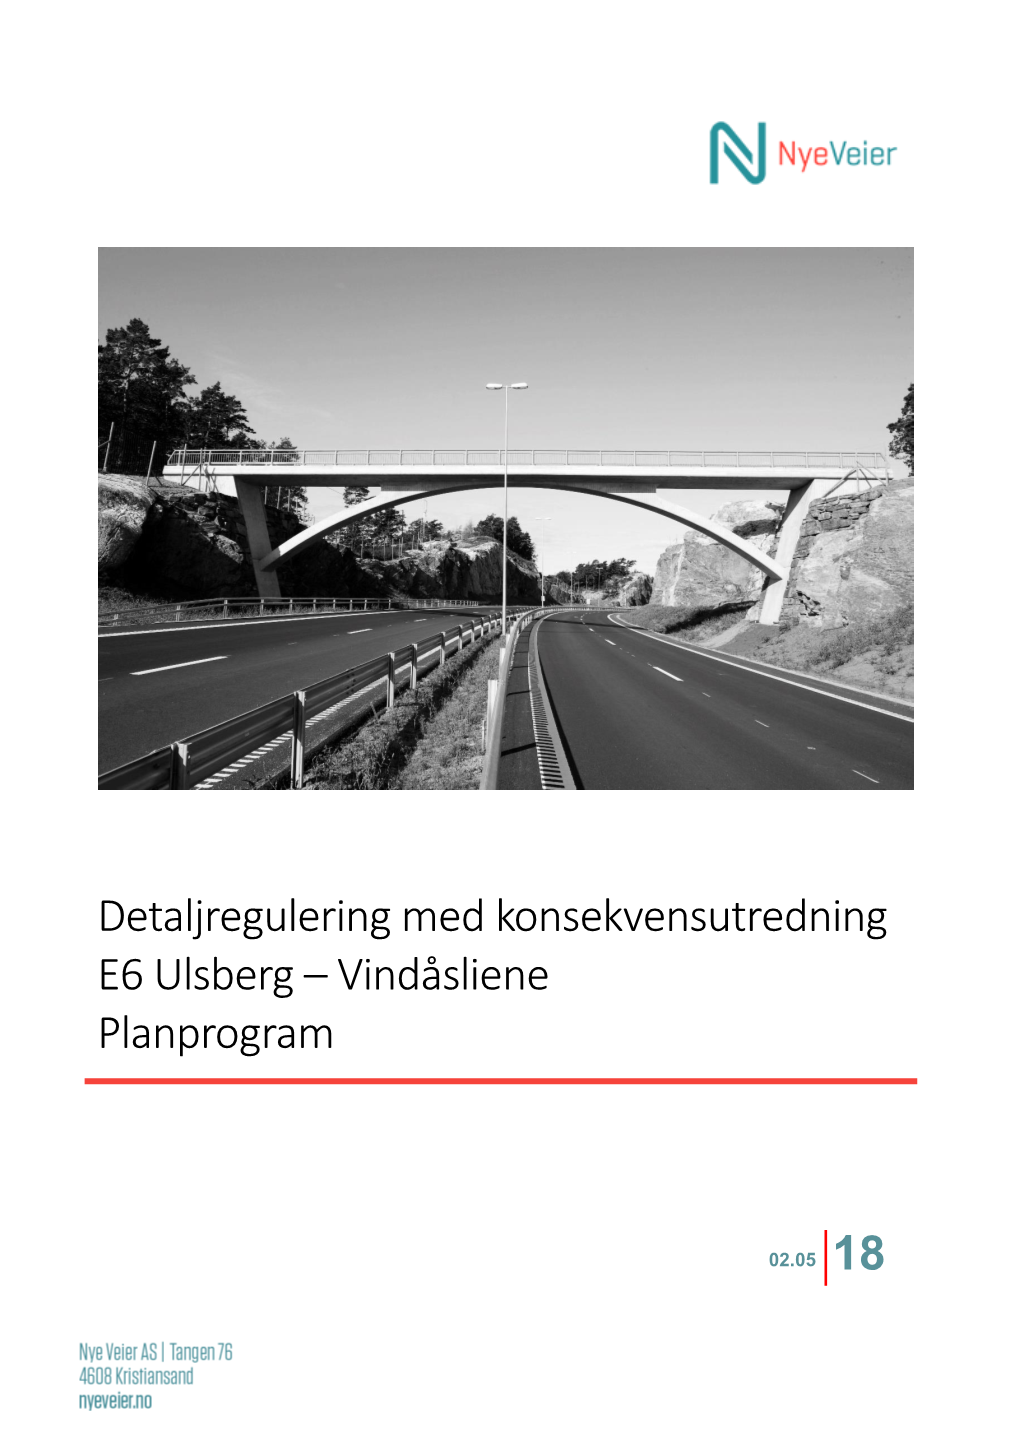 Planprogram E6 Ulsberg